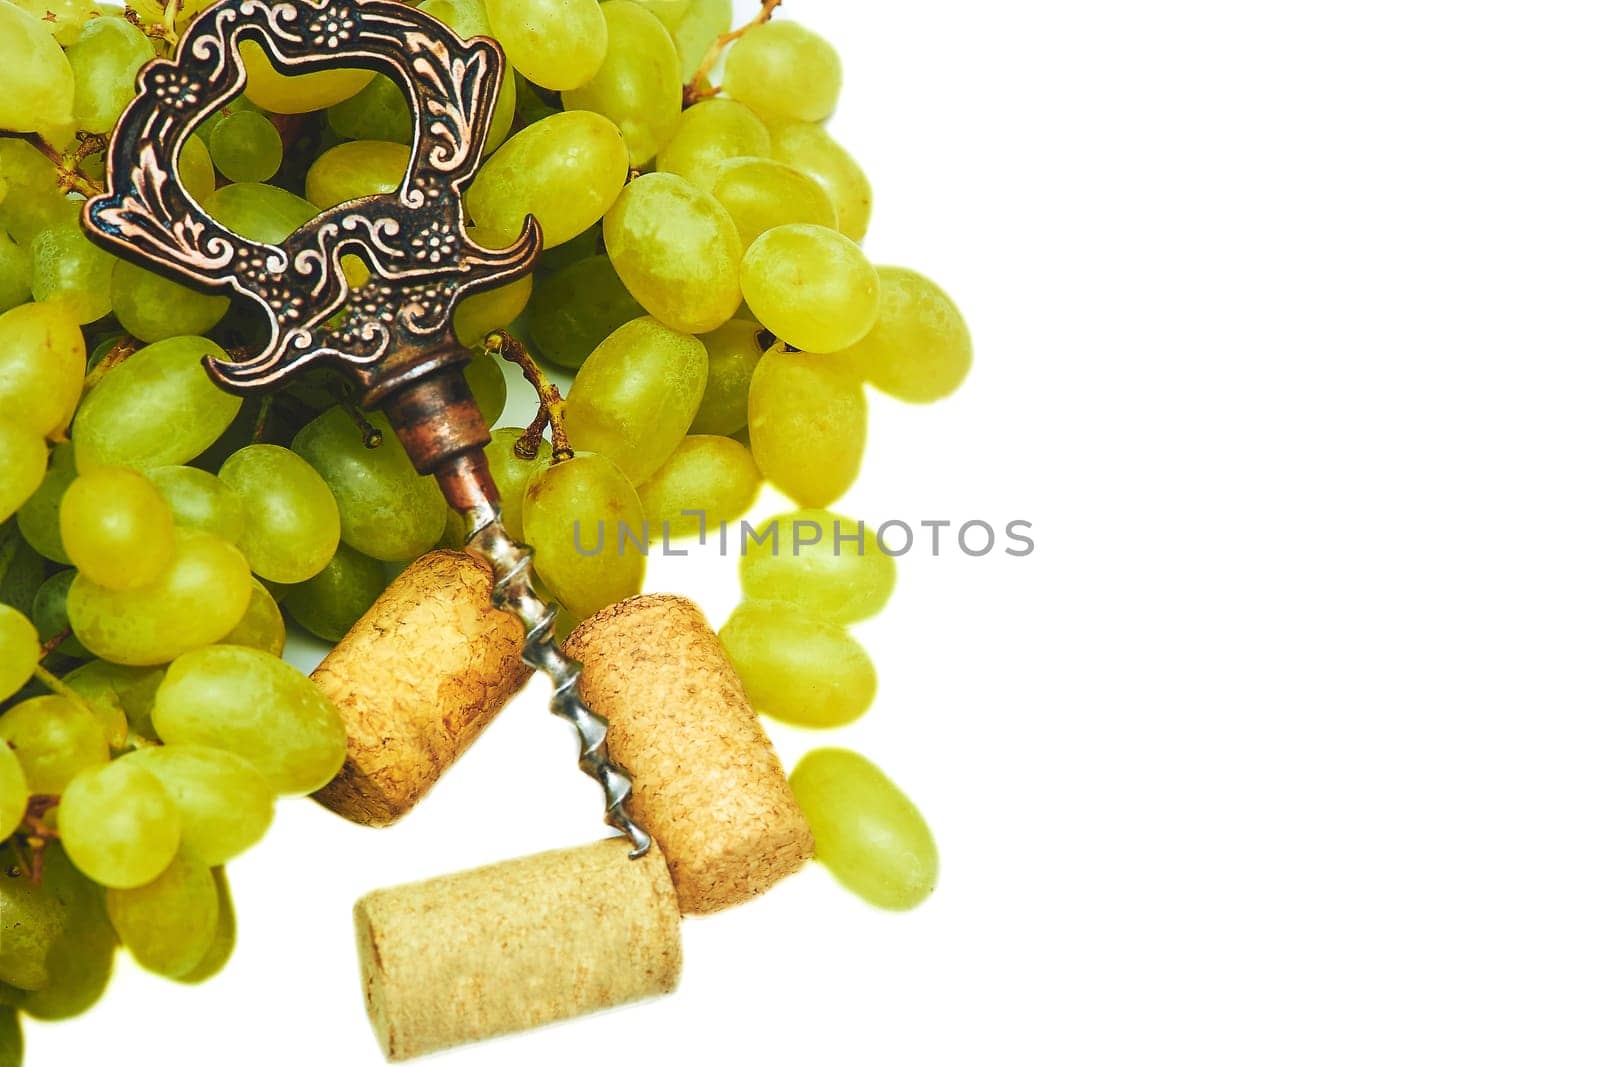 Corkscrew,wine stopper. Good old brandy, cognac, ripe grapes by jovani68